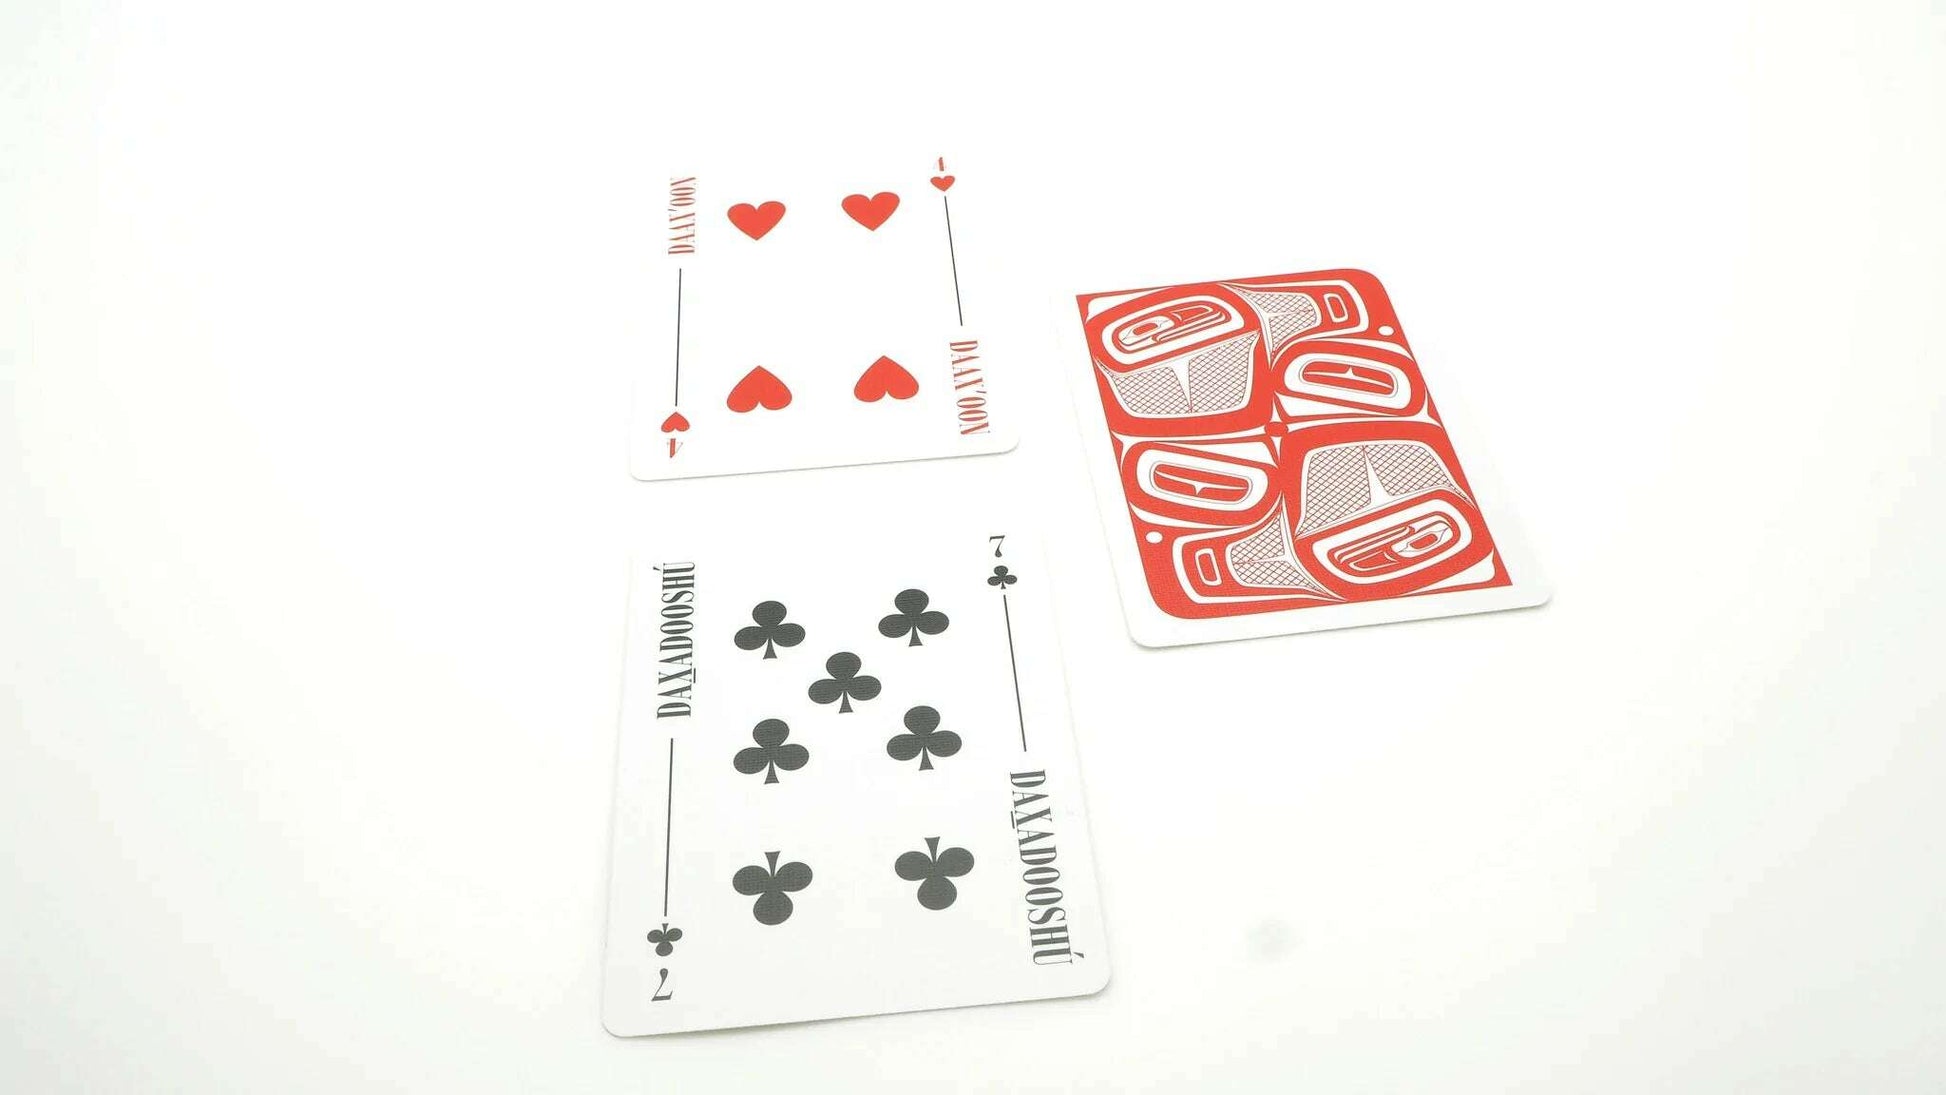 PlayingCardDecks.com-Trickster Co. Tlingit Playing Cards USPCC